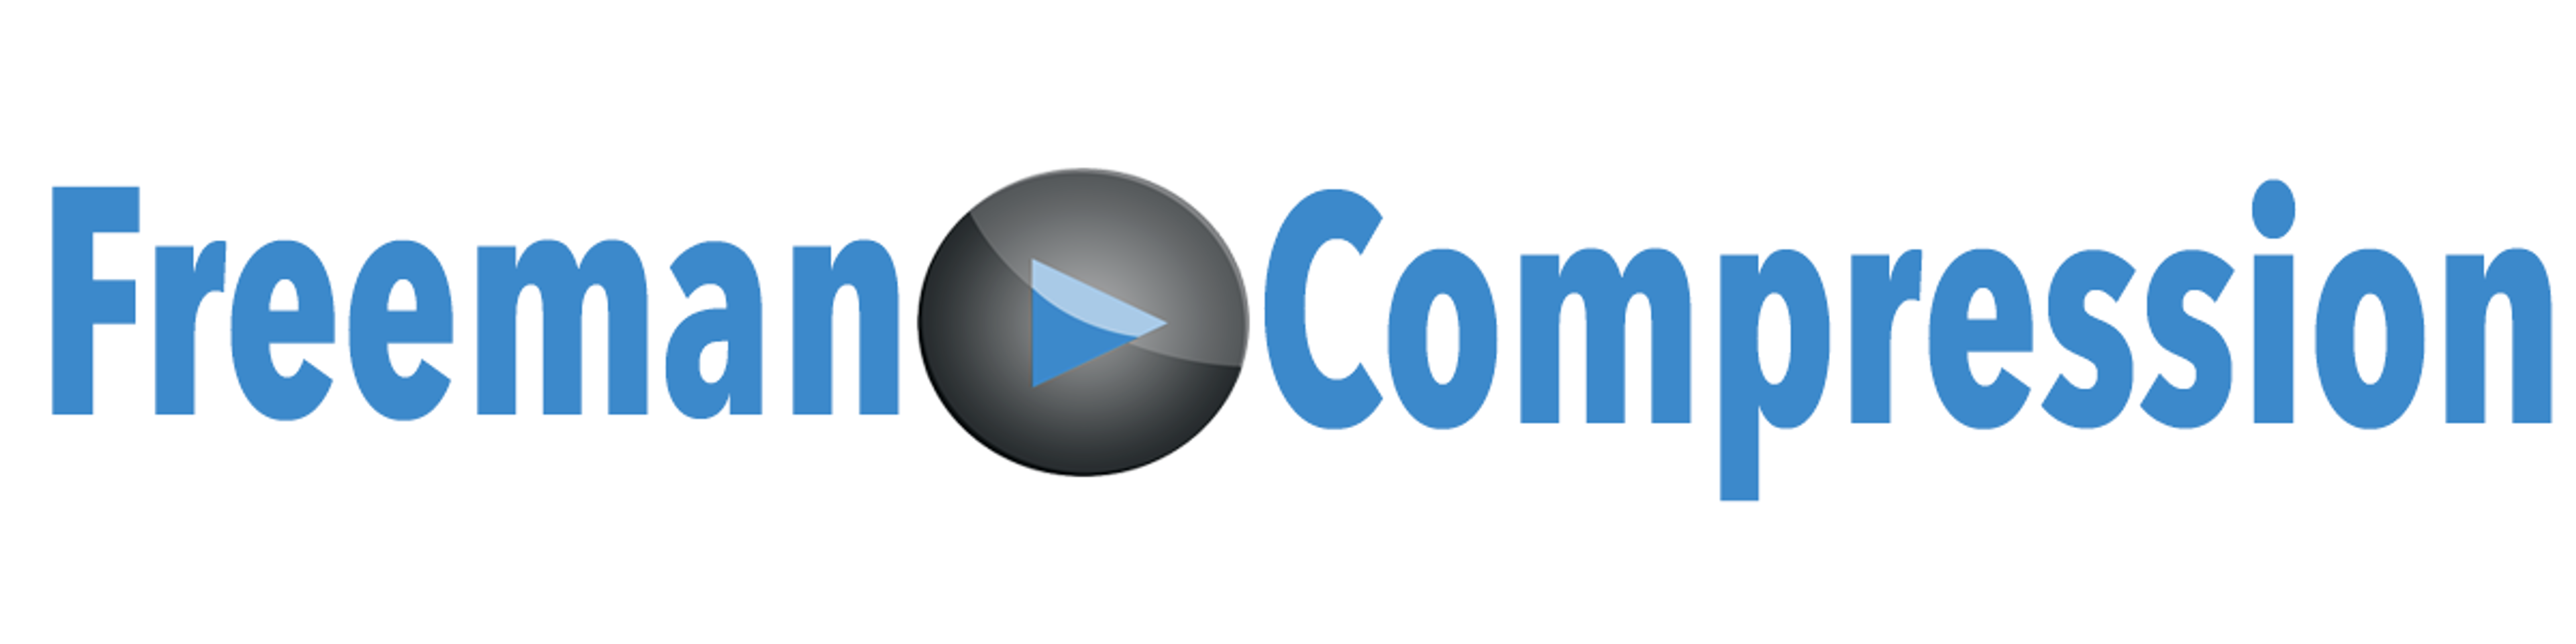 Freeman Compression logo